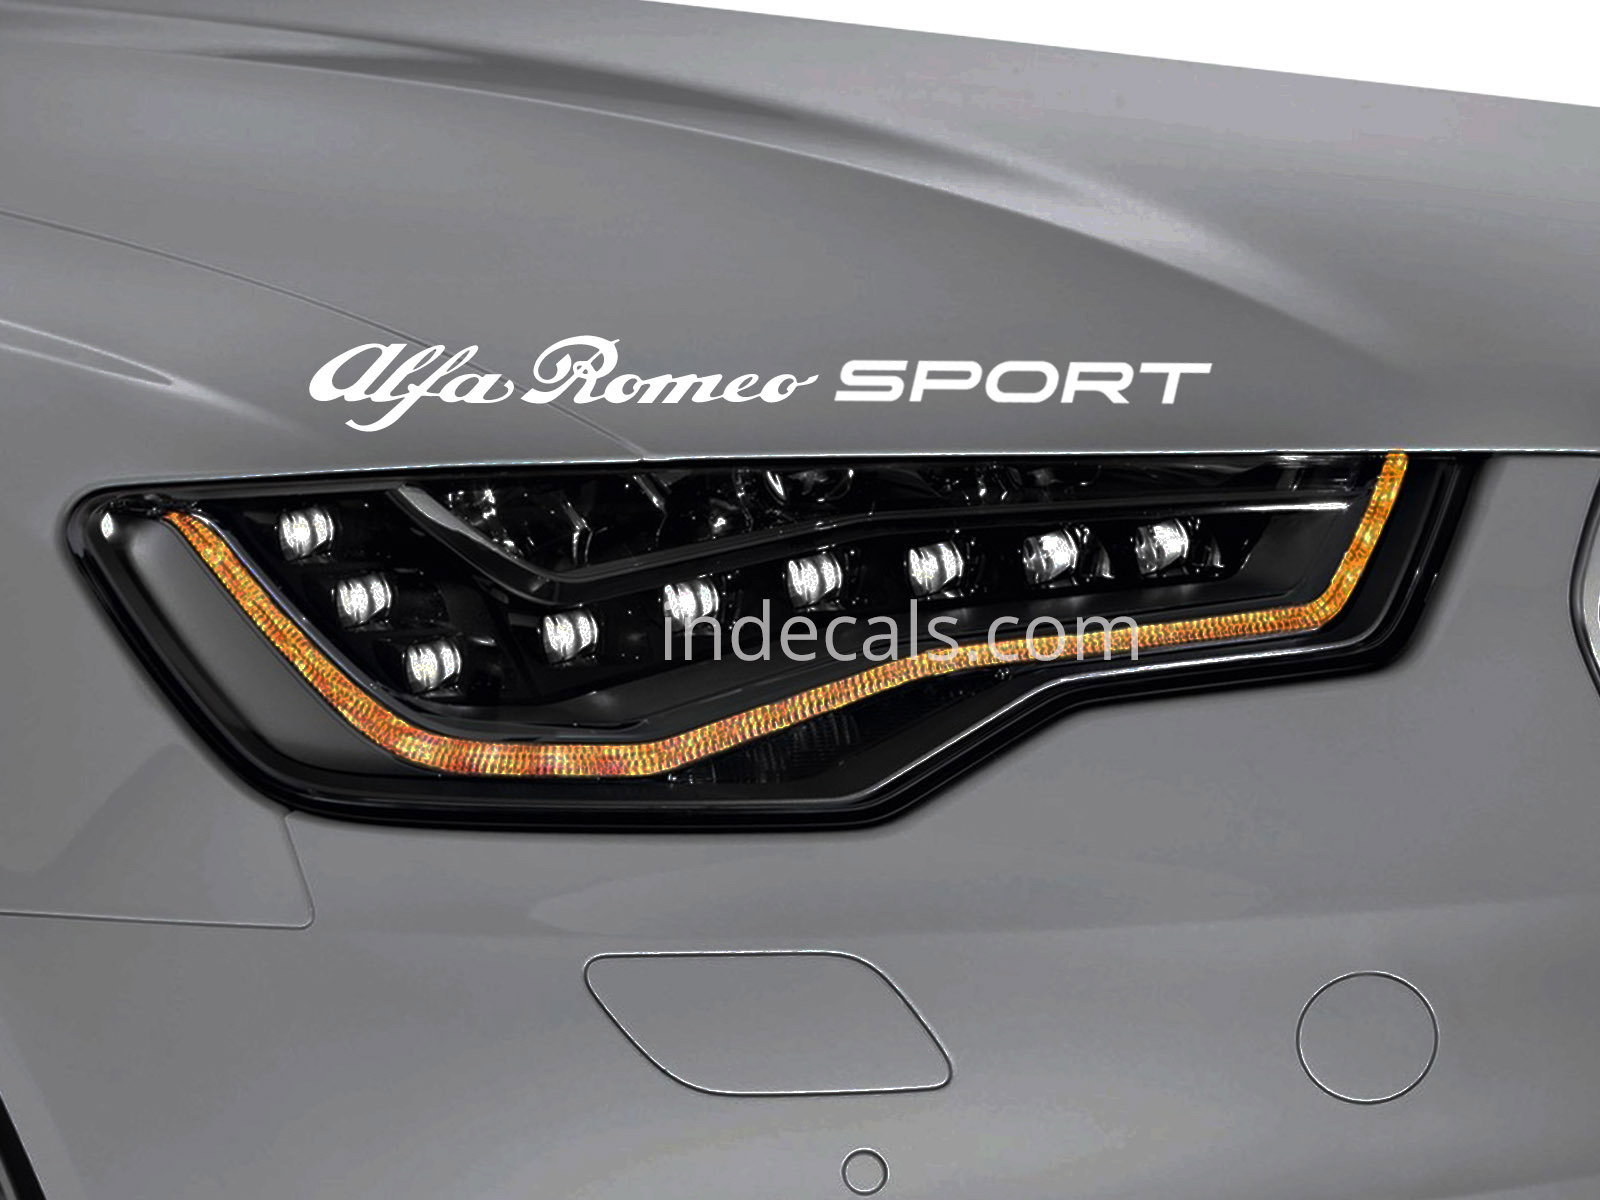 1 x Alfa Romeo Sport Sticker for Eyebrow - White